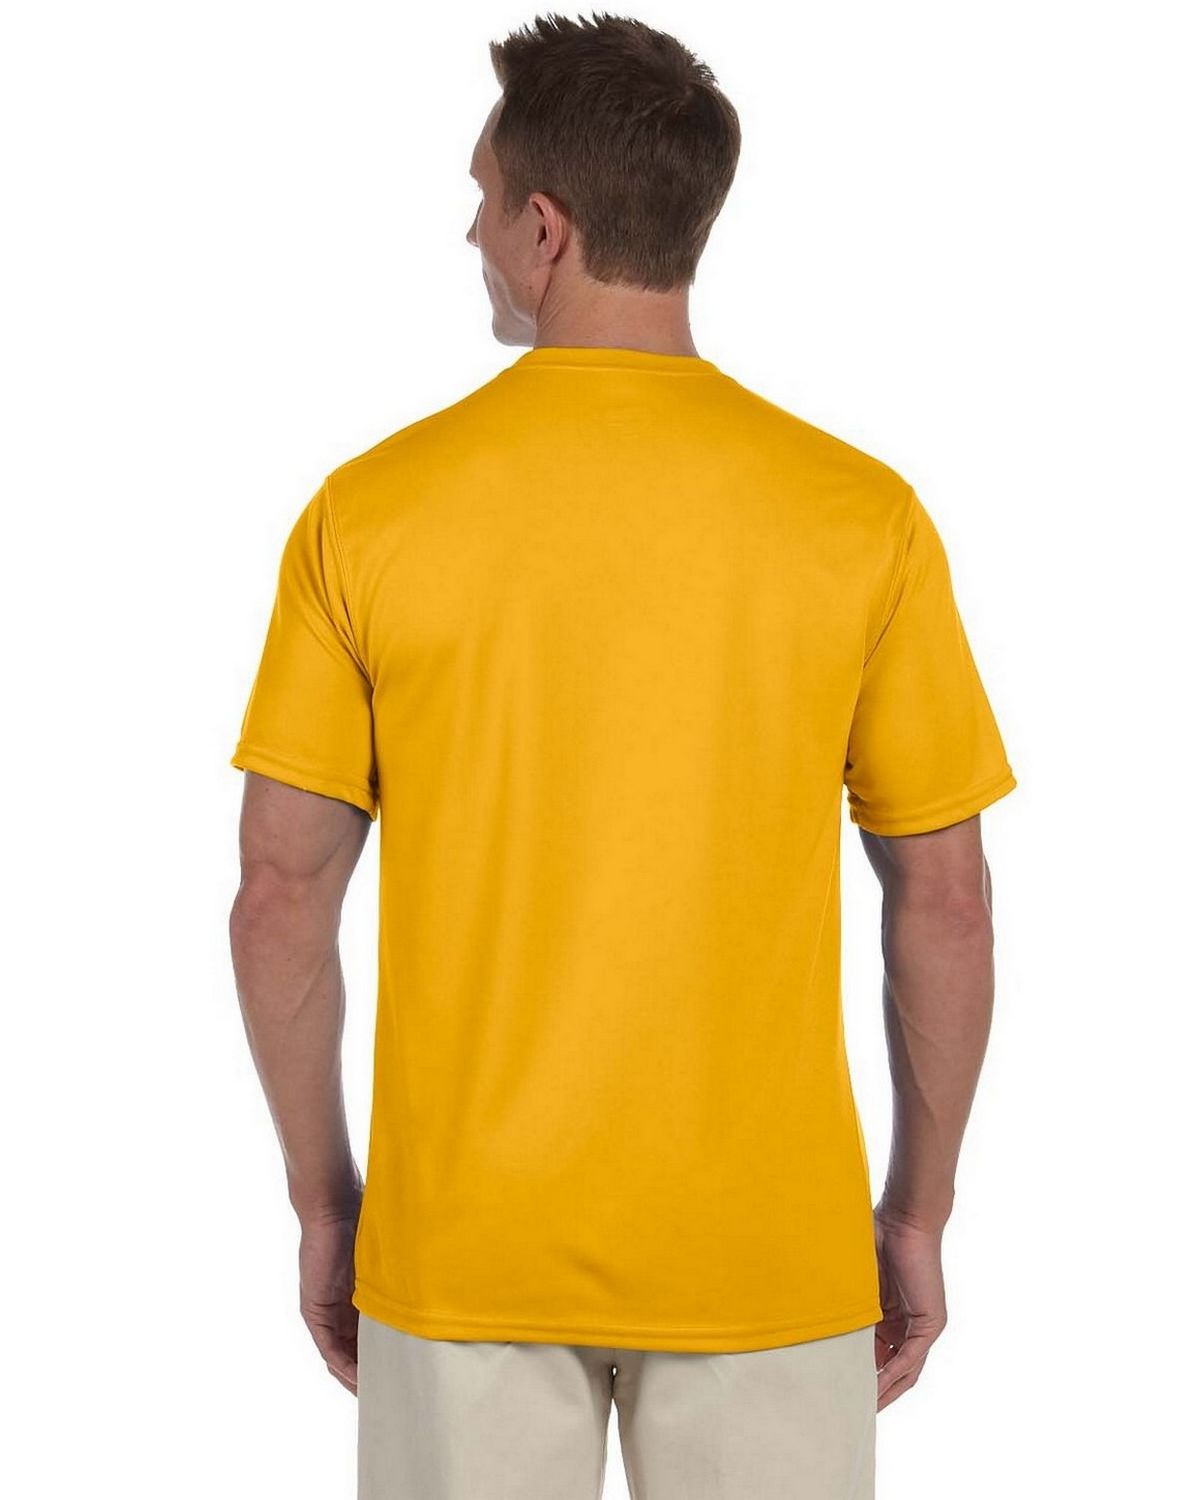 Augusta Sportswear 790 Polyester Moisture Wicking T Shirt